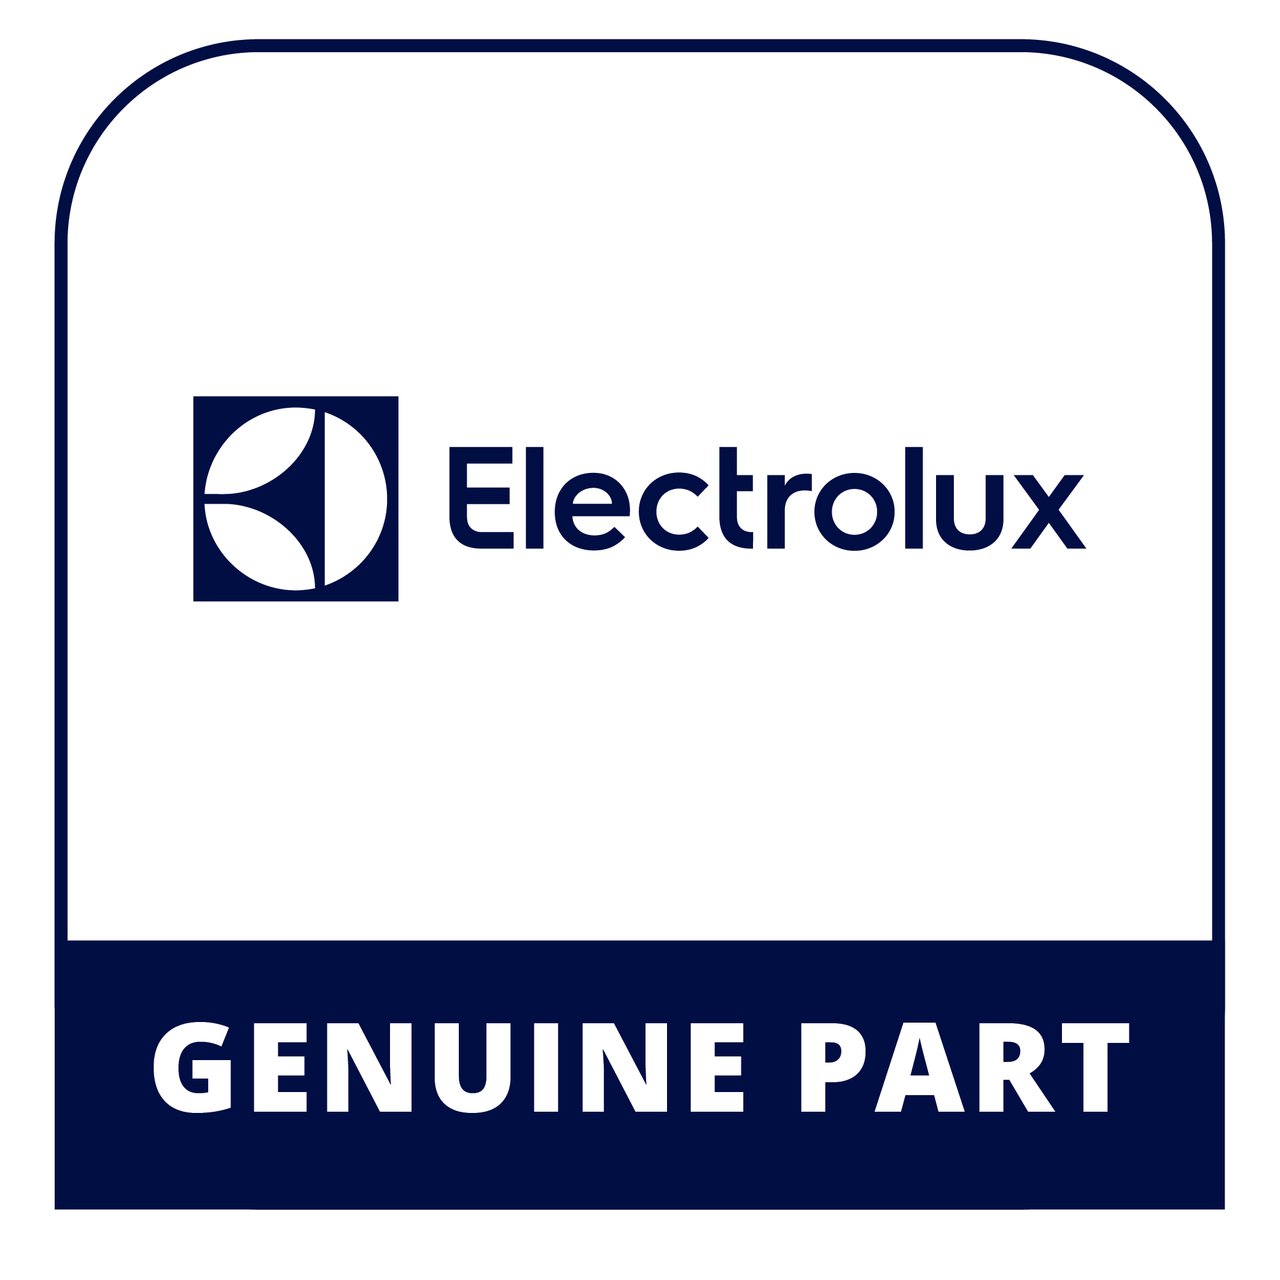 Frigidaire - Electrolux 139038864 - Control Panel Assem - Genuine Electrolux Part